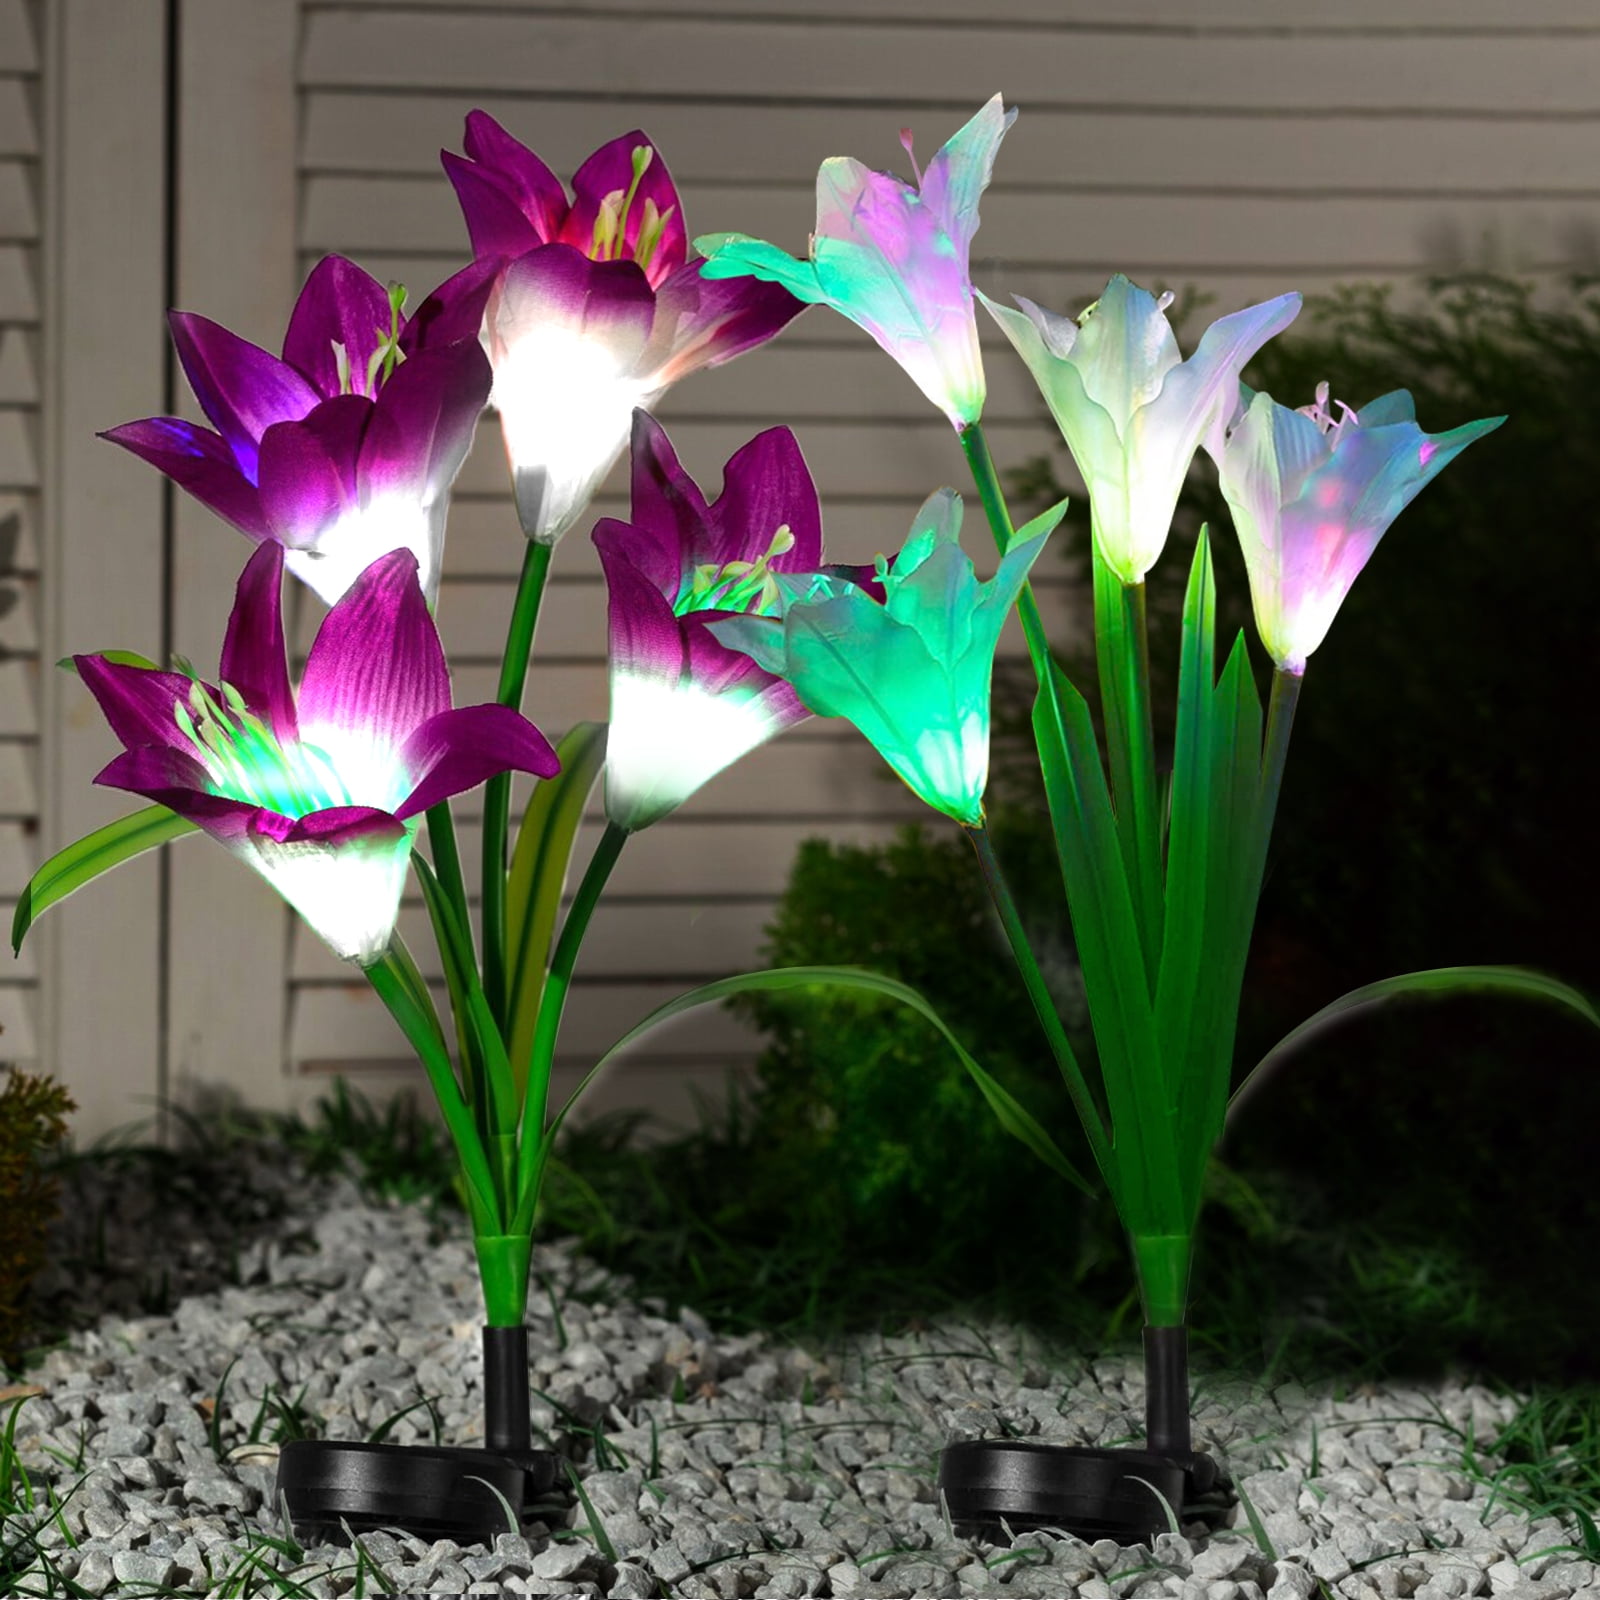 2Pcs Solar Powered Lights Rose Flower LED Lamp Decorative Garden Yard Lawn Decor 